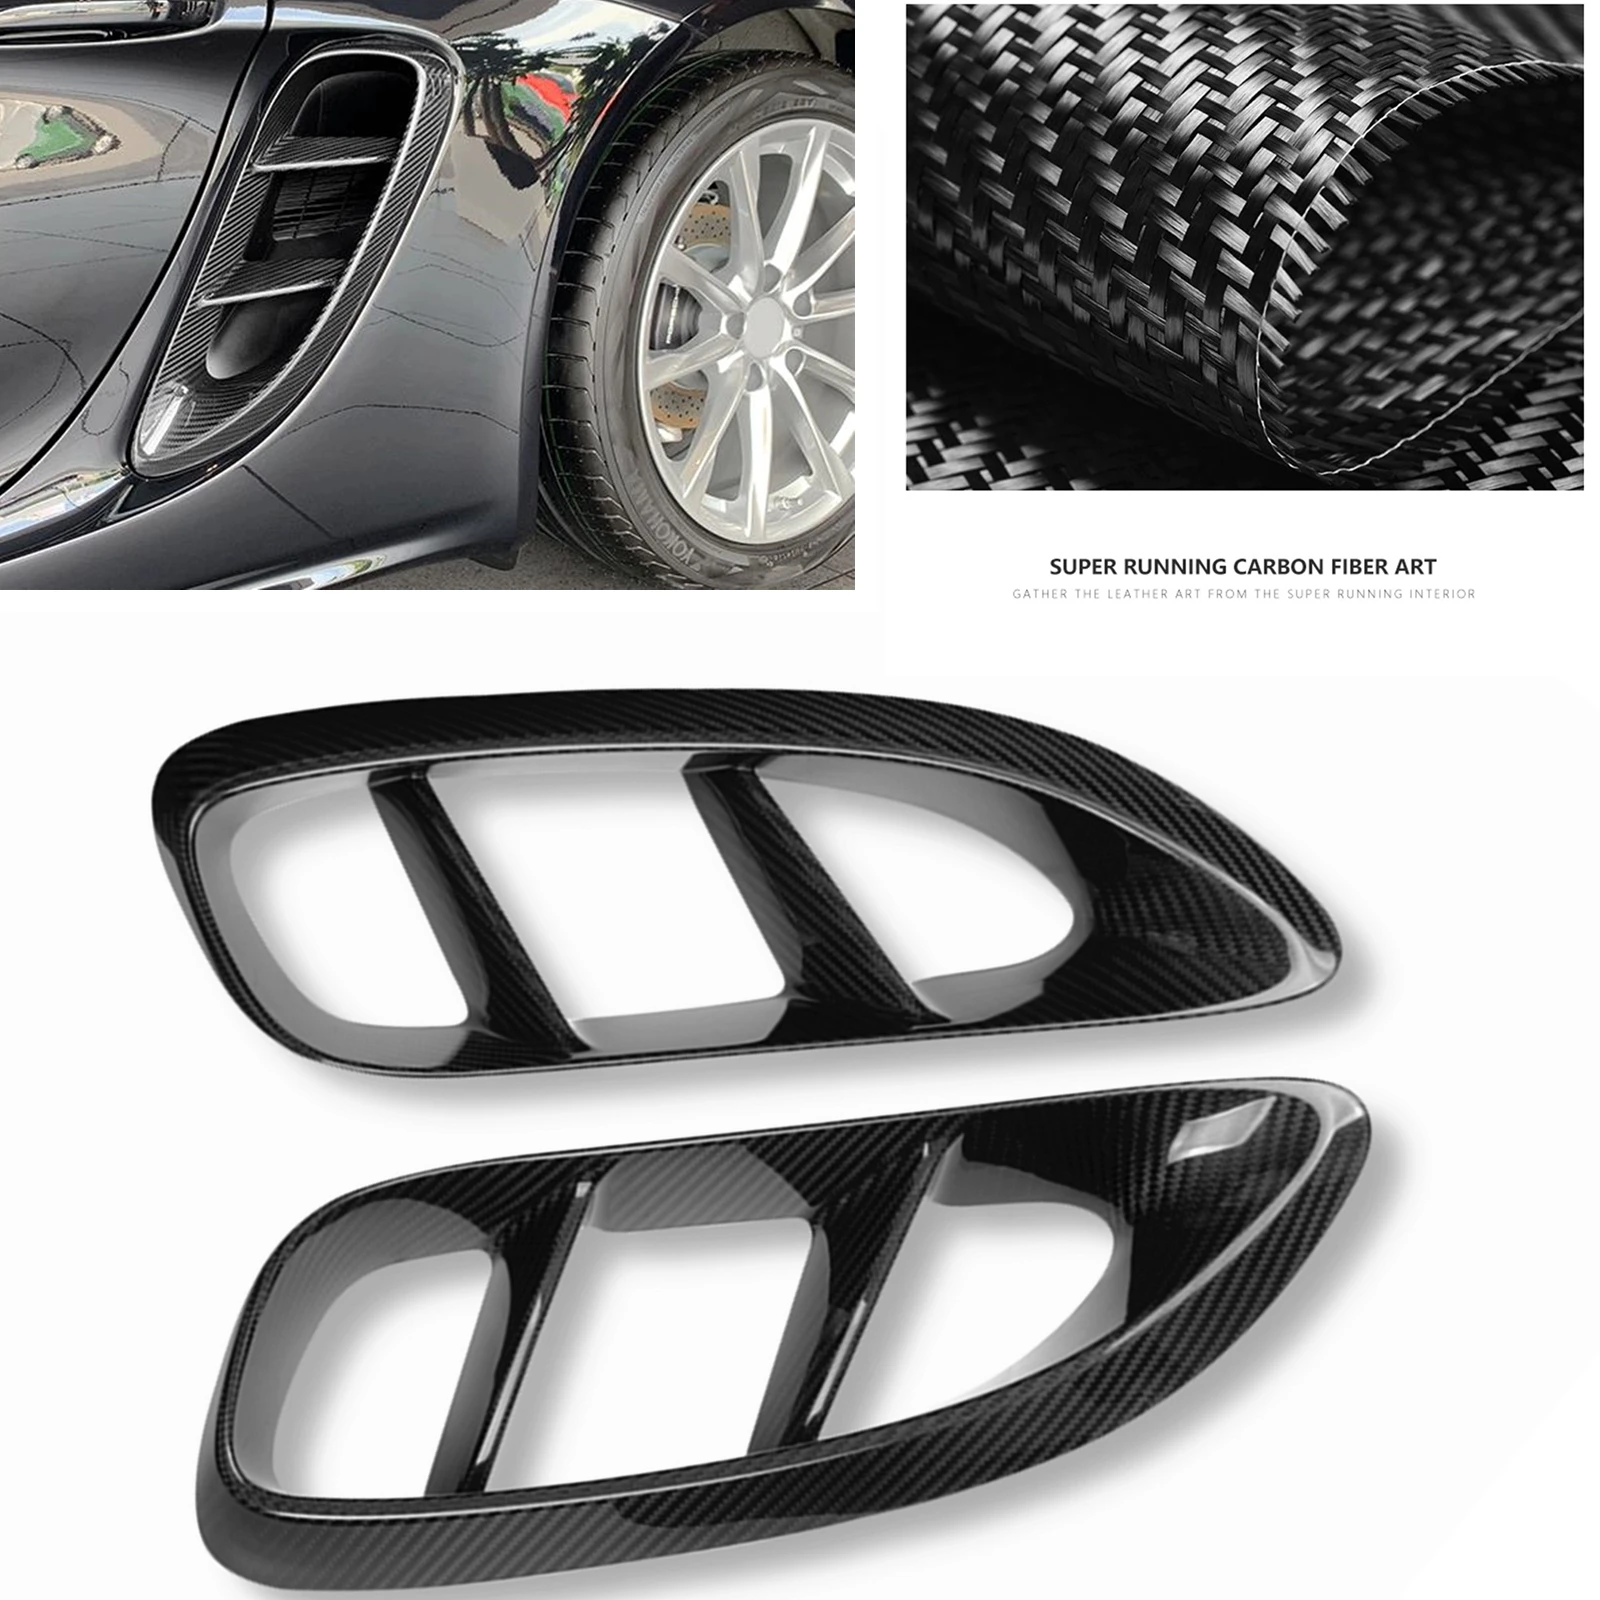 

Car Side Air Vent Outlet Cover Trim For Porsche 718 Boxster Cayman 2016-2018 Carbon Fiber Flow Fender Bumper Duct Intake Grille